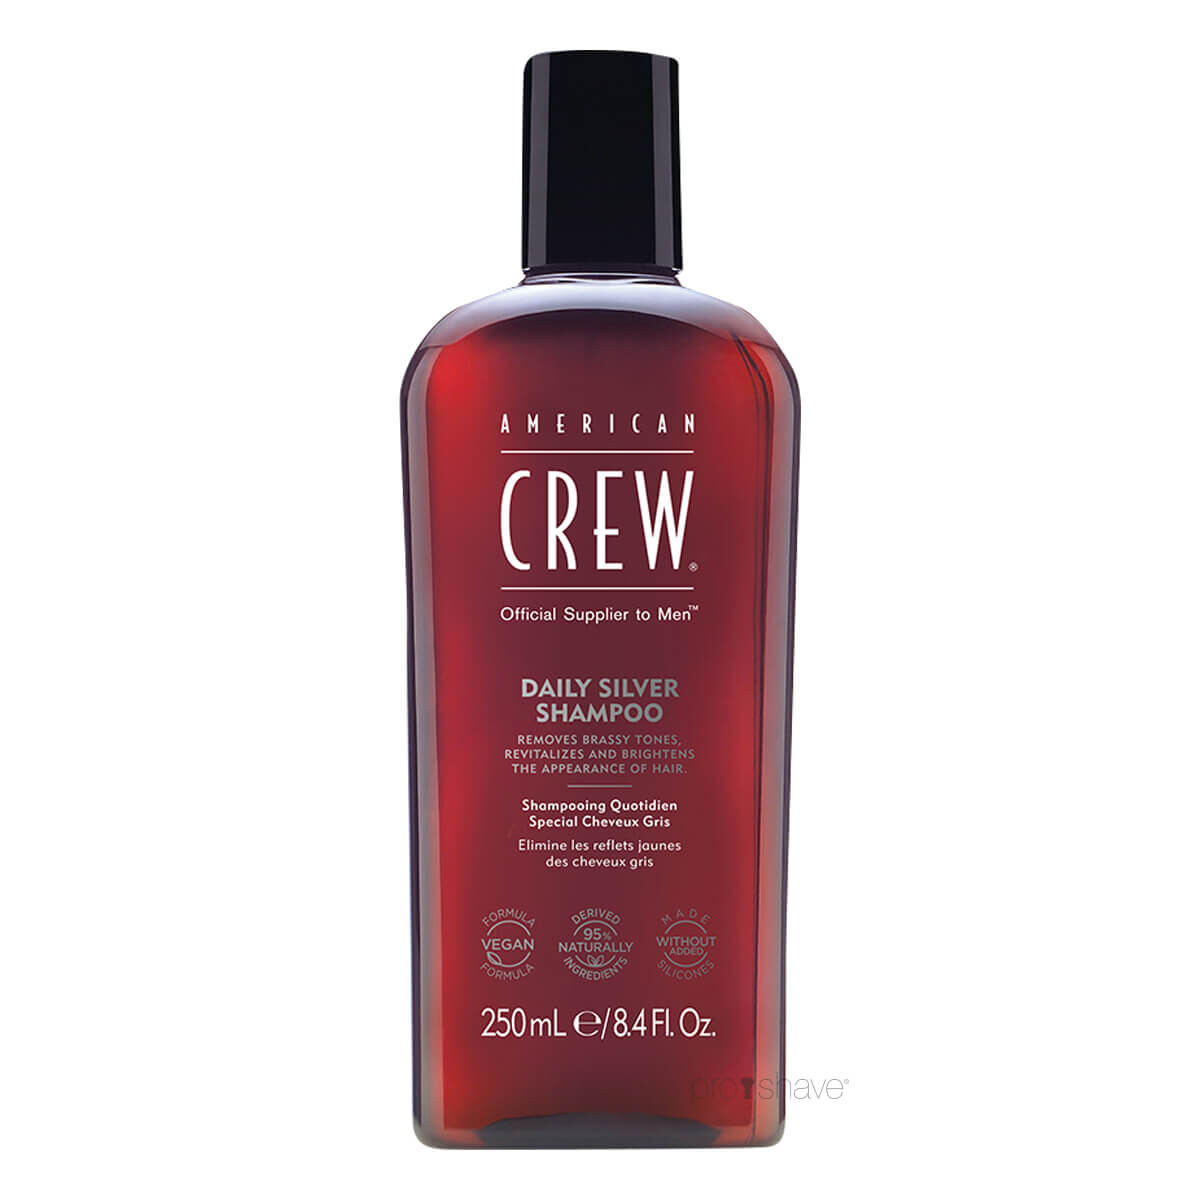 American Crew Daily Silver Shampoo, 250 ml.